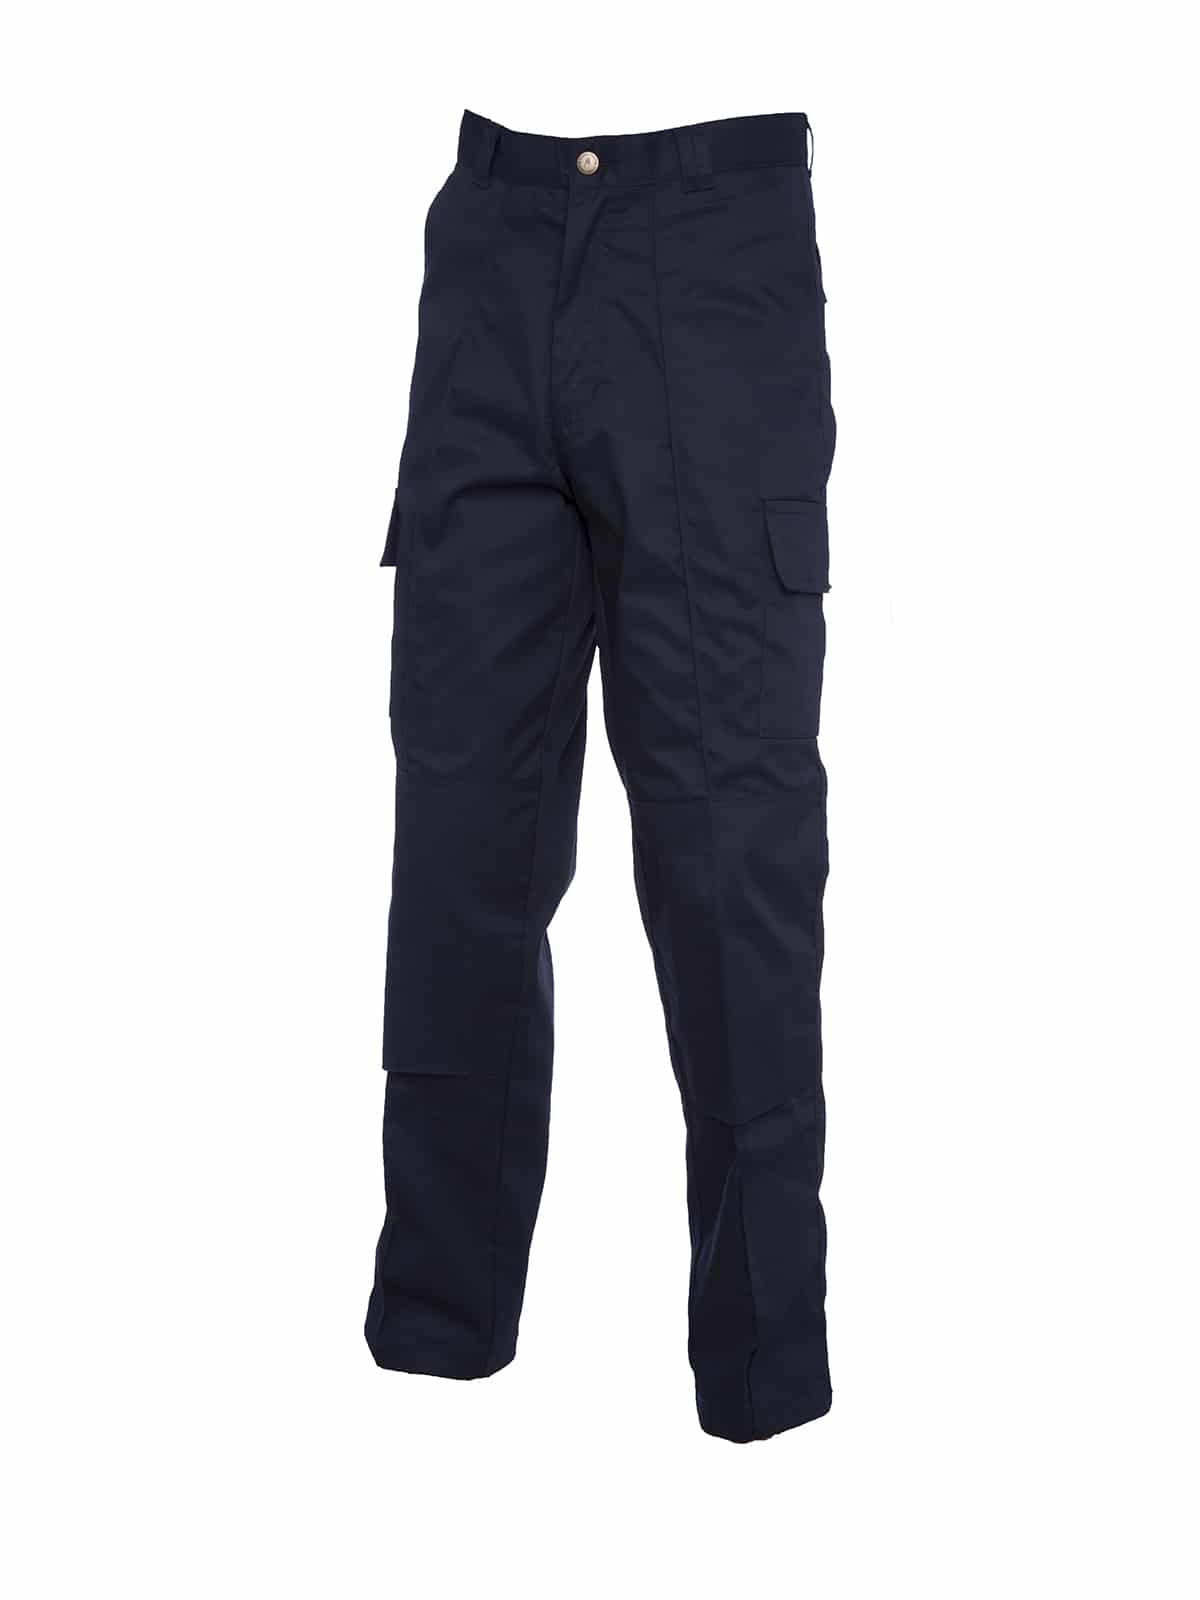 Work Wear Causal Top Uneek Cargo Trouser 28-52 Knee Pad UC-904 Pockets Long 